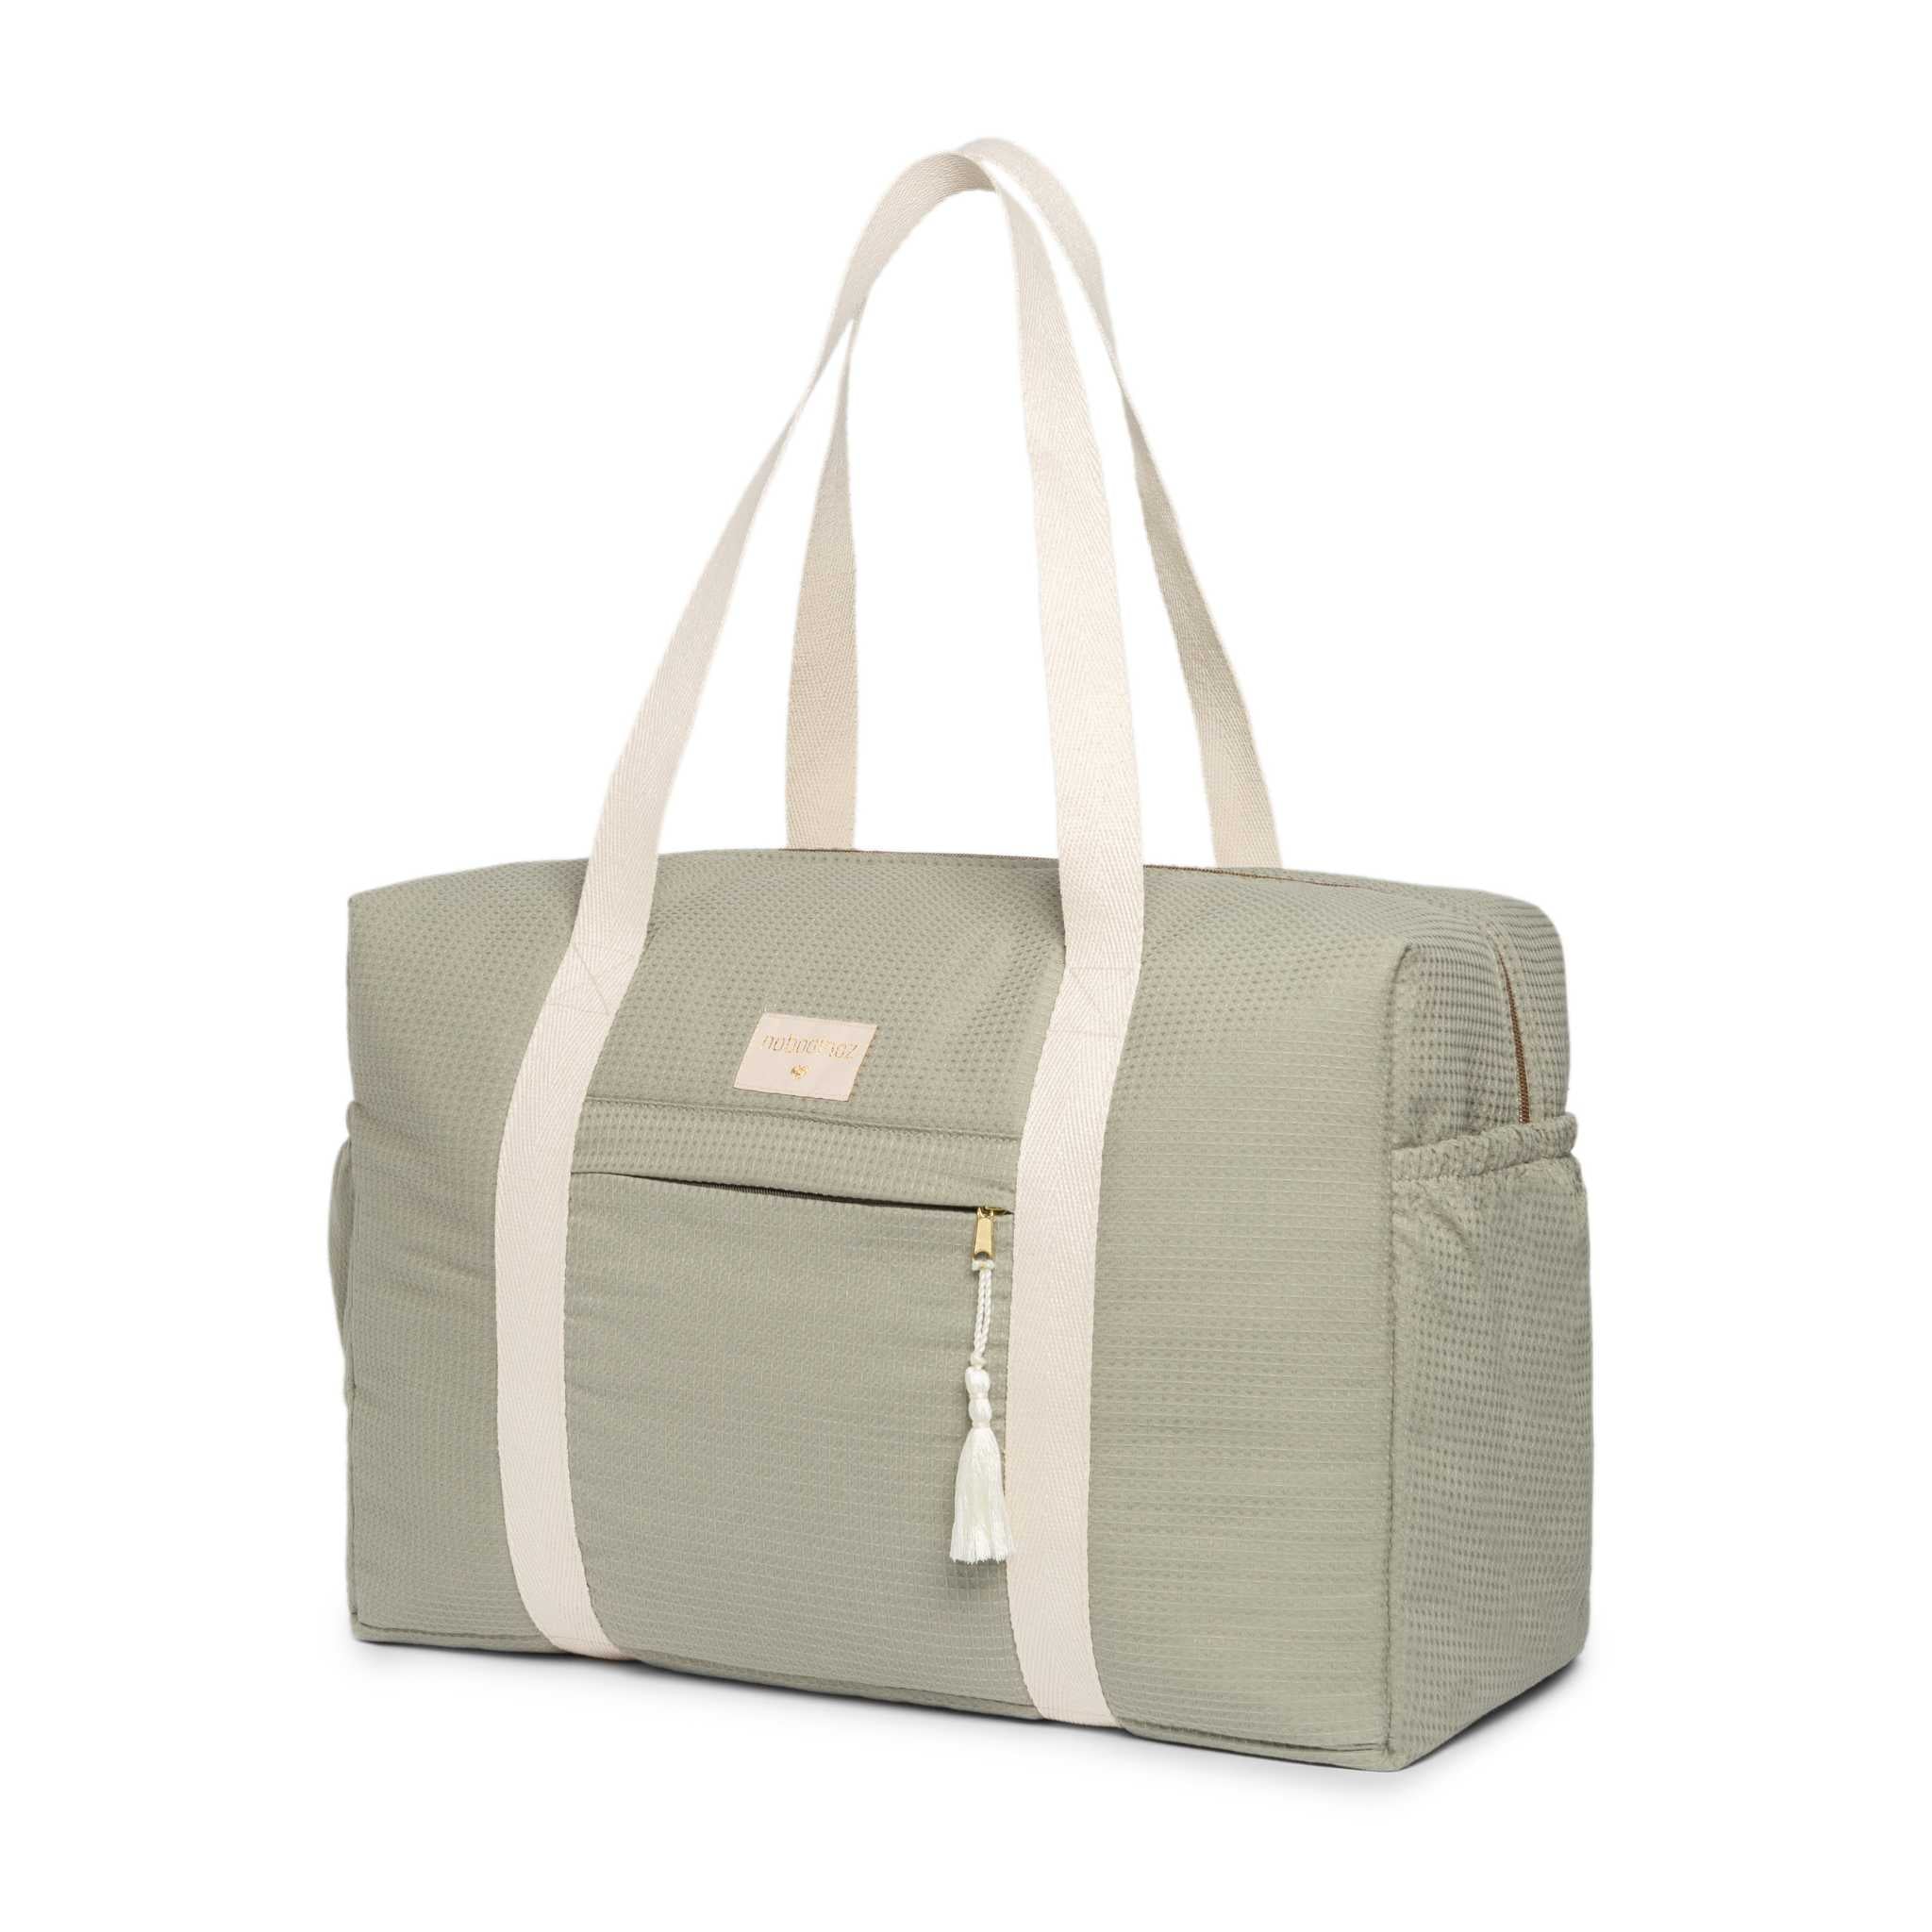 Nobodinoz Opera Changing Bag - Laurel Green -Showing full bag with handles up